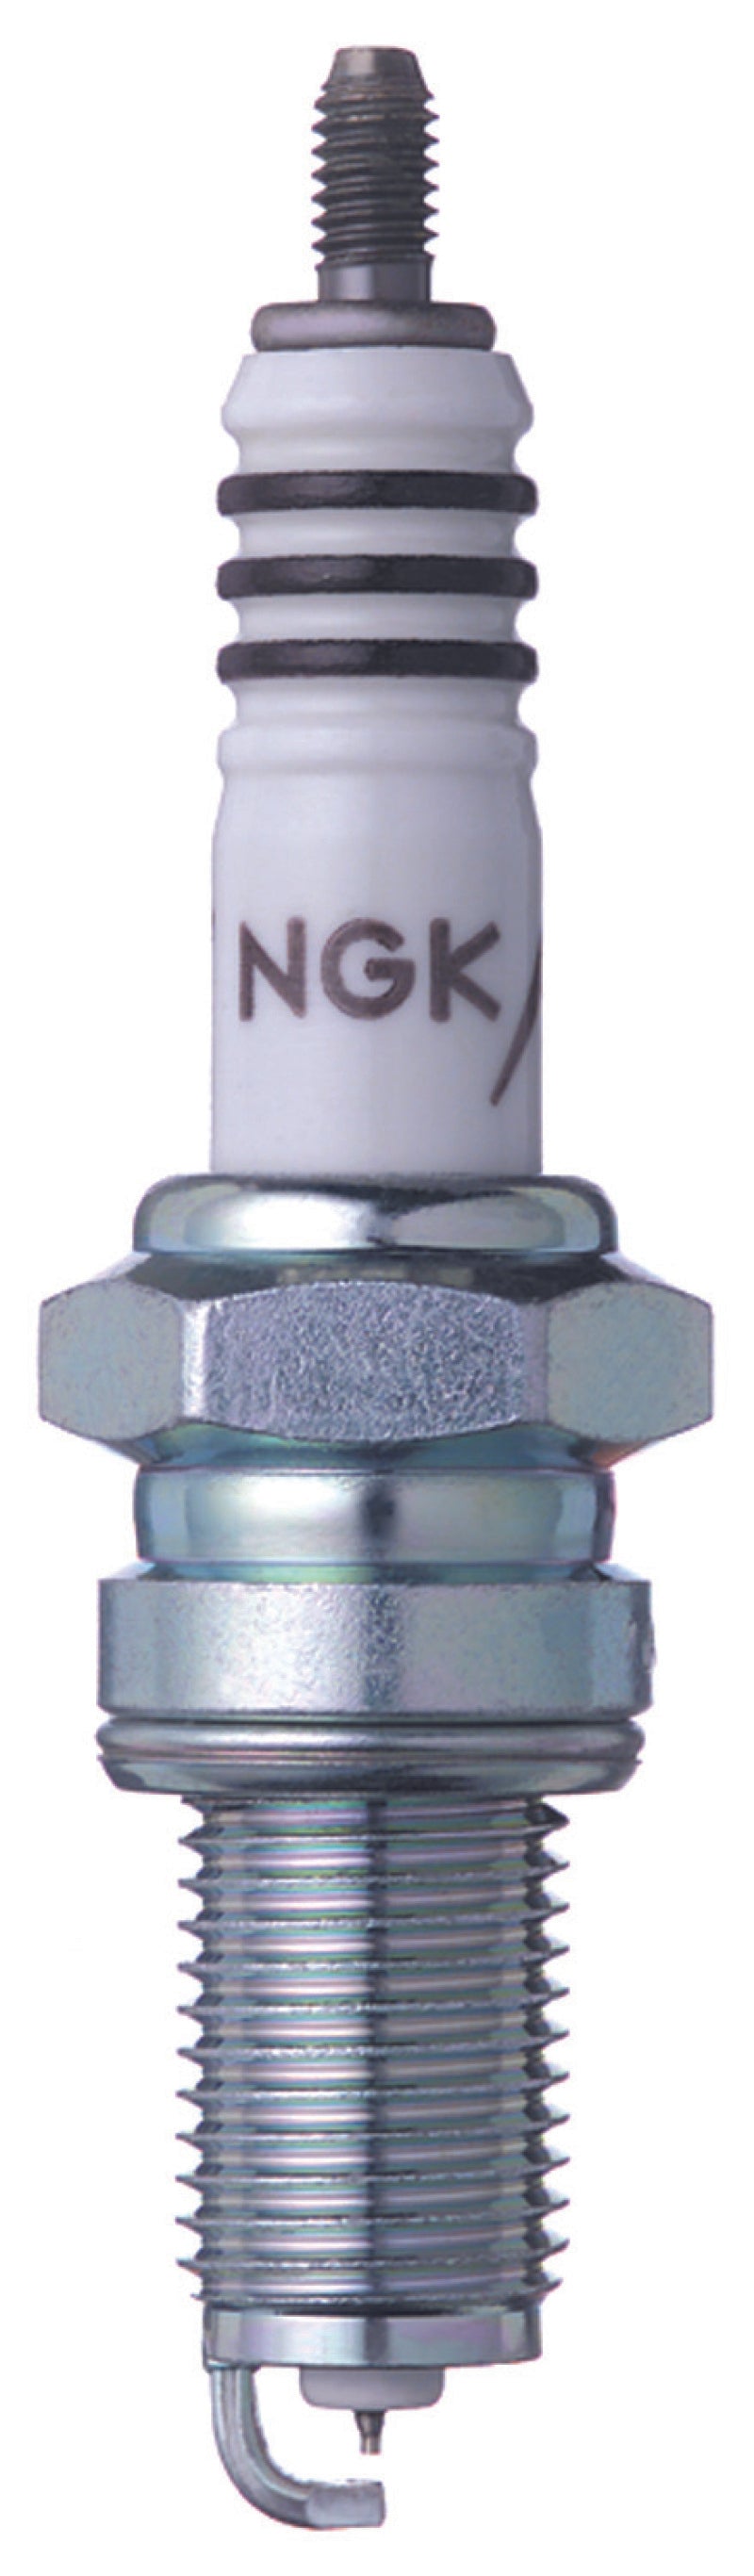 NGK Iridium IX Spark Plug Box of 4 (DPR9EIX-9) -  Shop now at Performance Car Parts